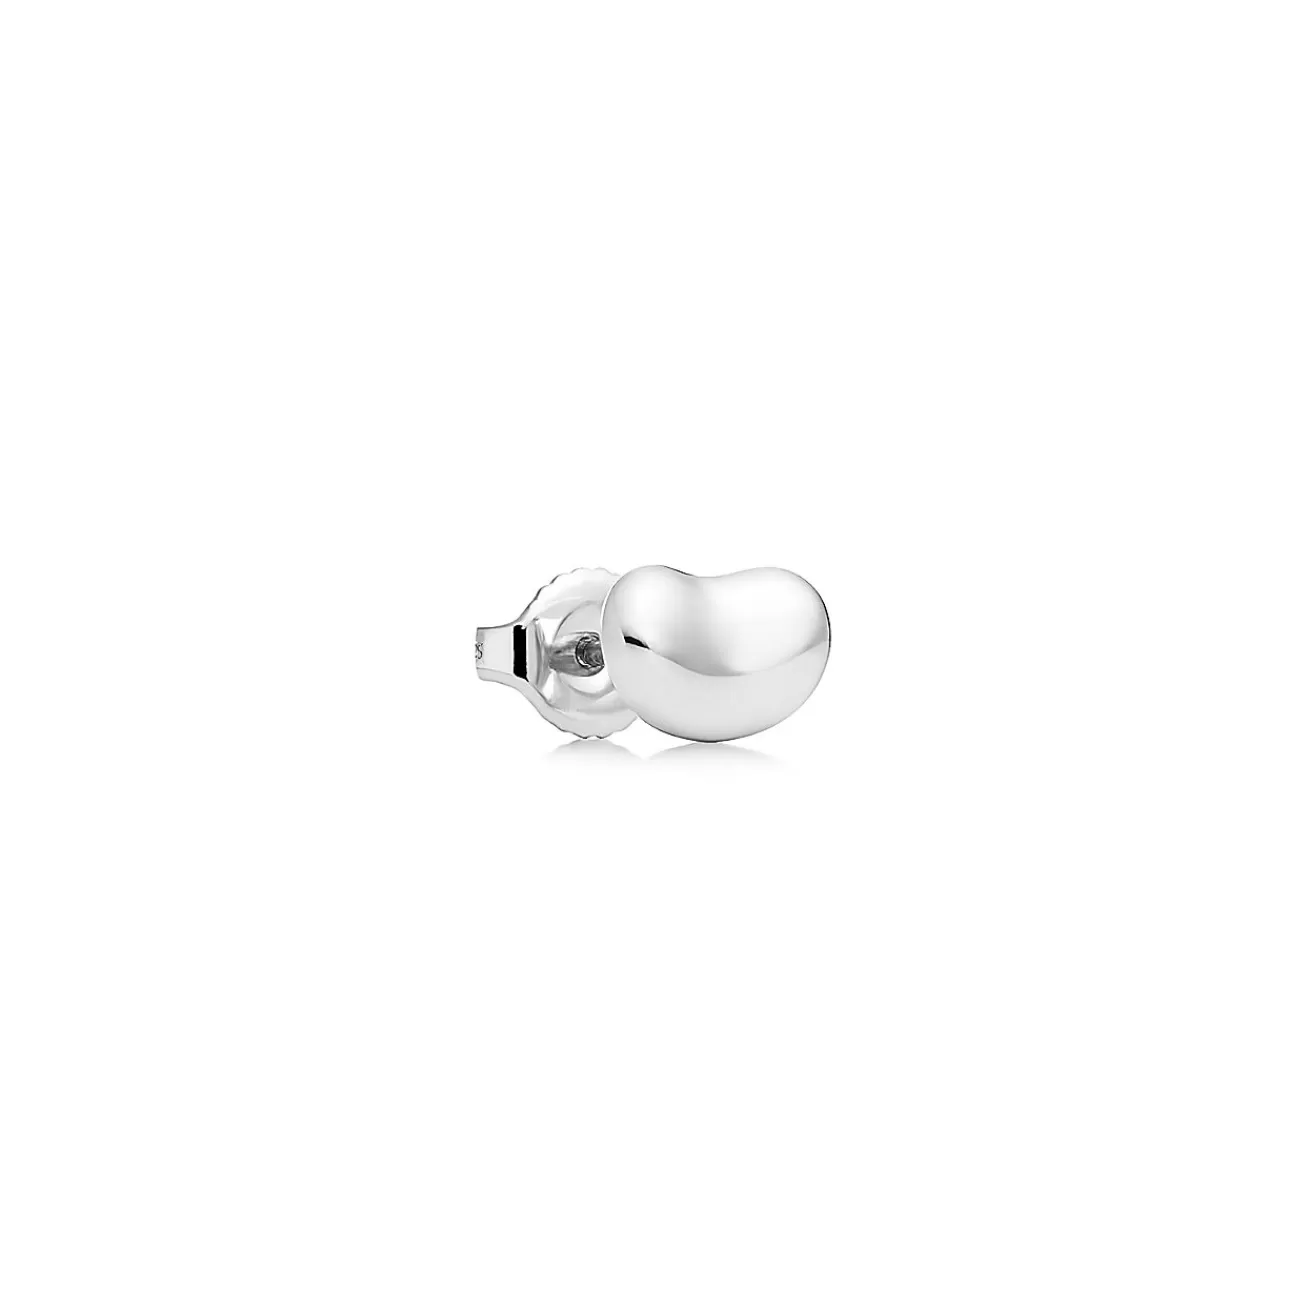 Tiffany & Co. Elsa Peretti® Bean® design Earrings in Sterling Silver, 9 mm | ^ Earrings | Sterling Silver Jewelry